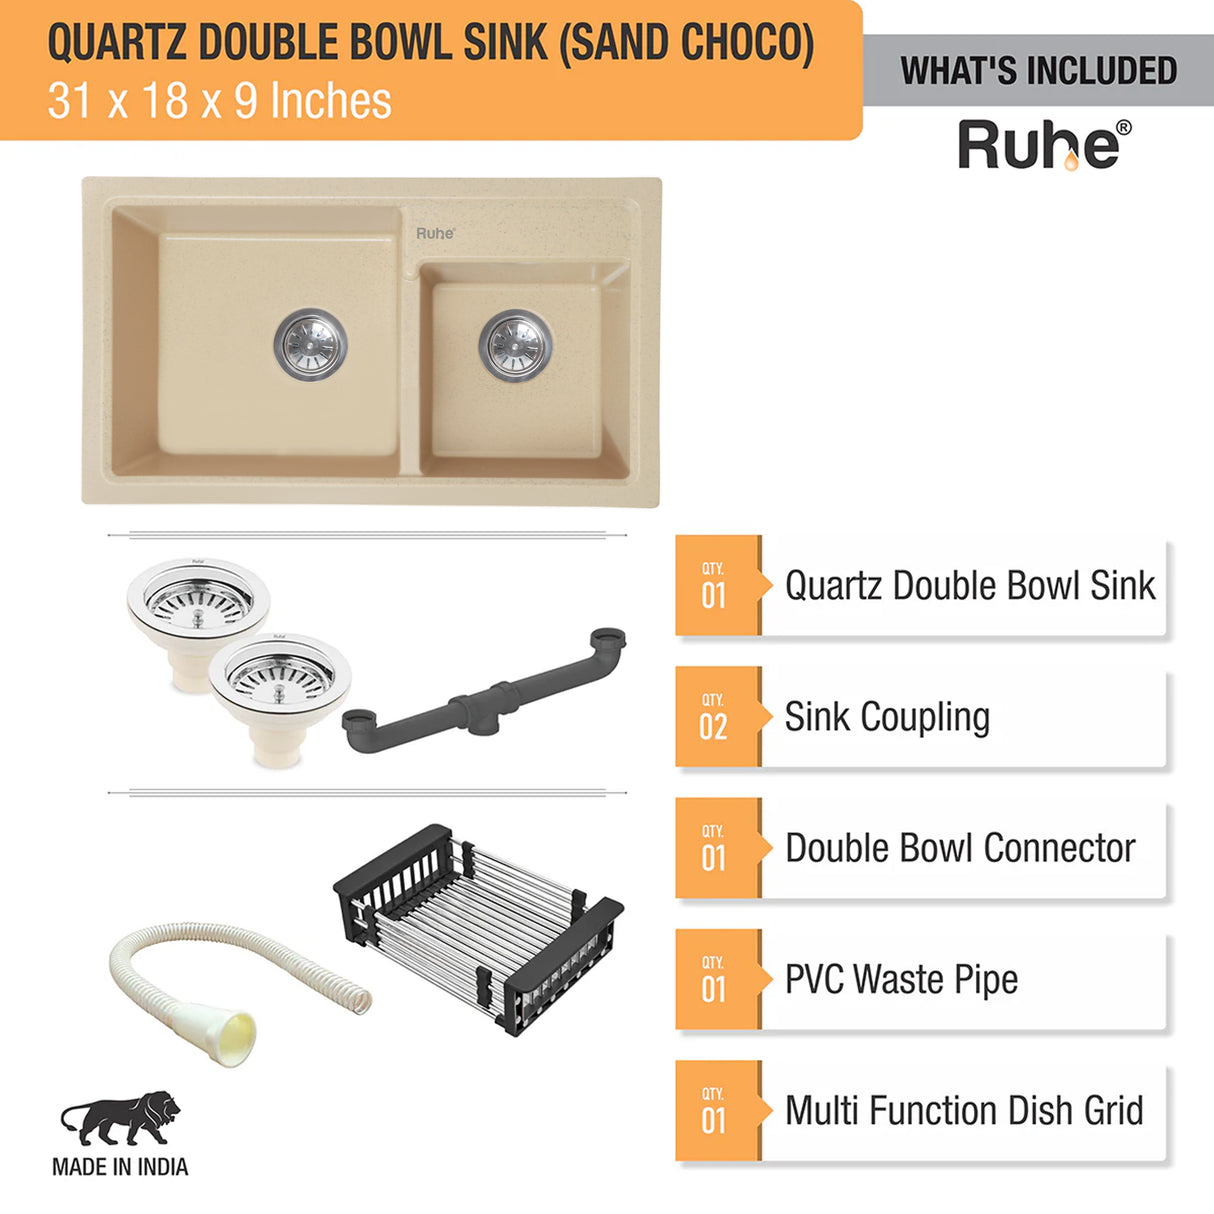 Quartz Double Bowl Kitchen Sink - Sand Choco (31 x 18 x 9 inches) - by Ruhe®